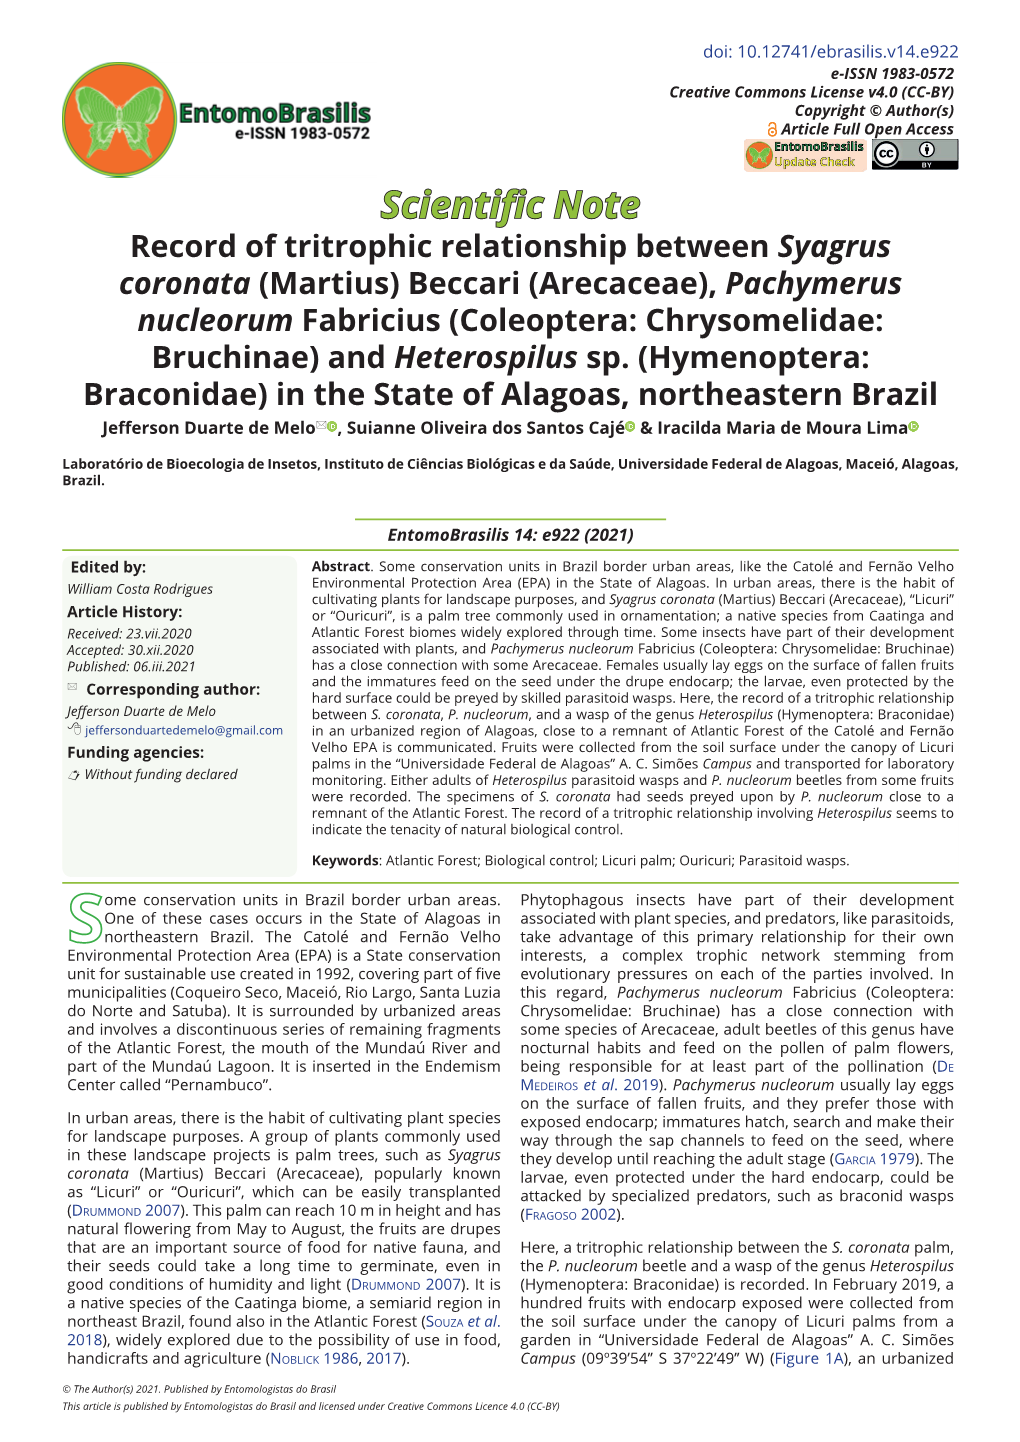 Record of Tritrophic Relationship Between Syagrus Coronata (Martius)